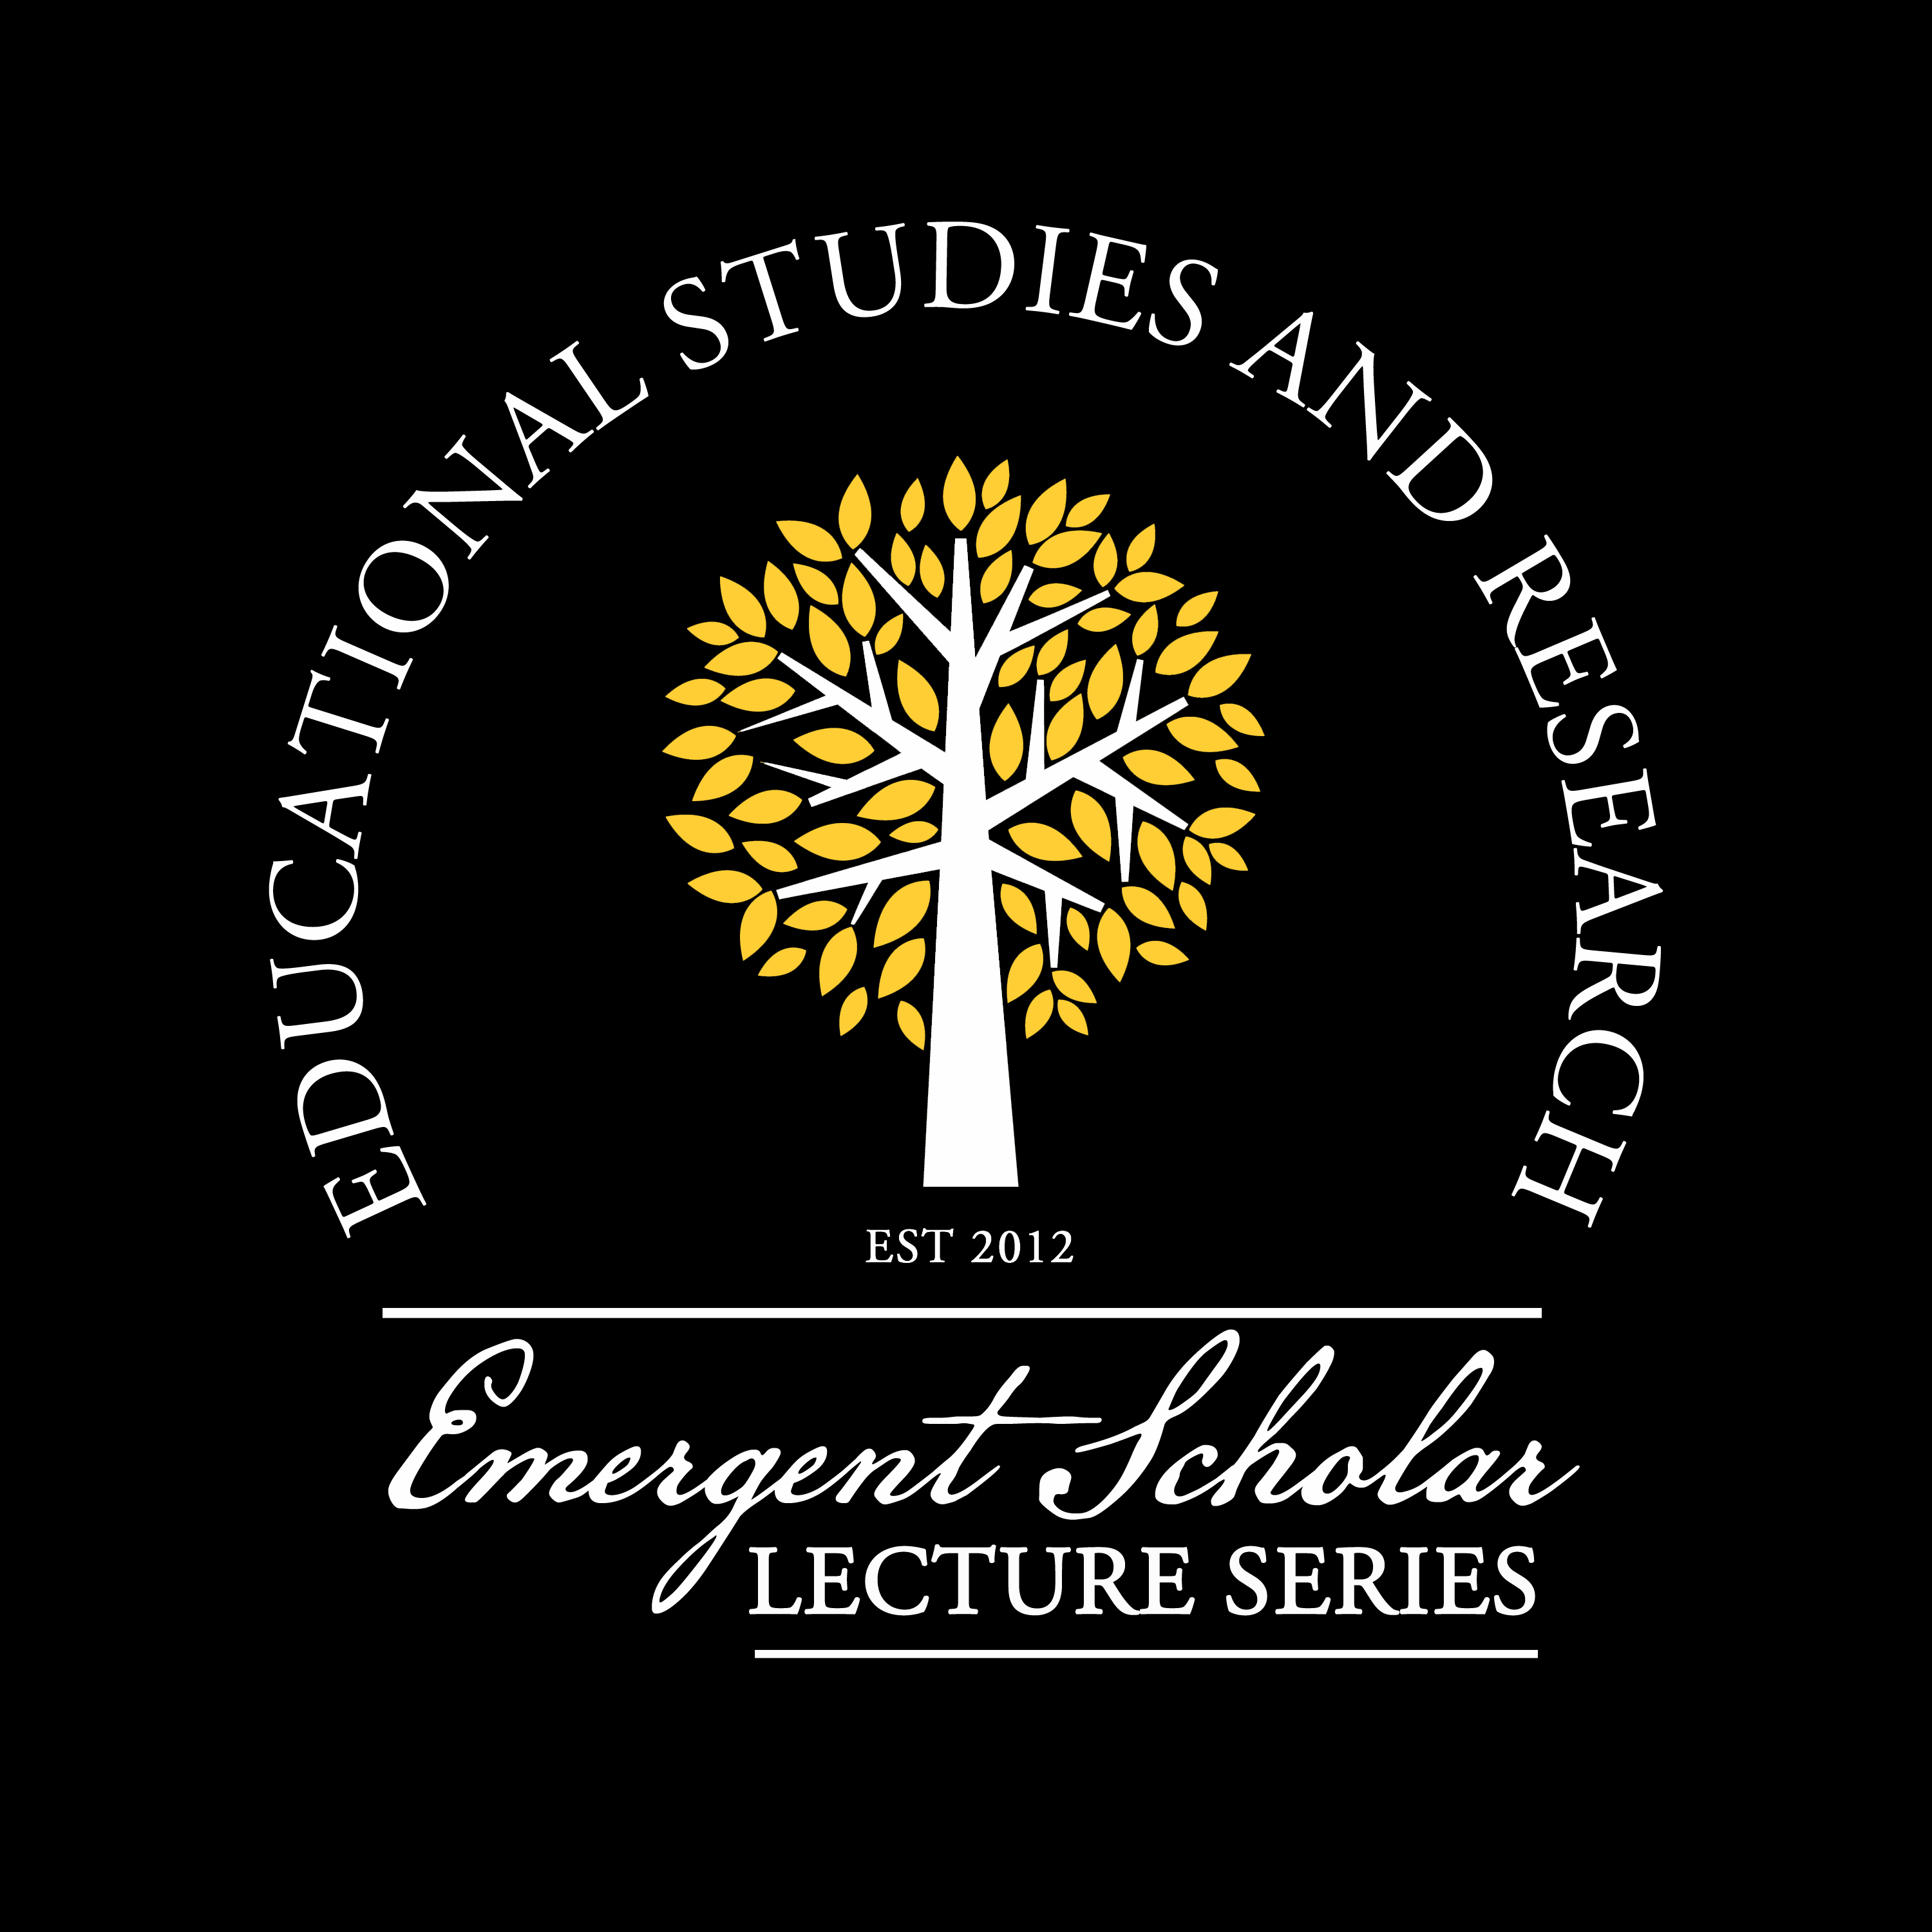 Emergent Scholar Lecture Series